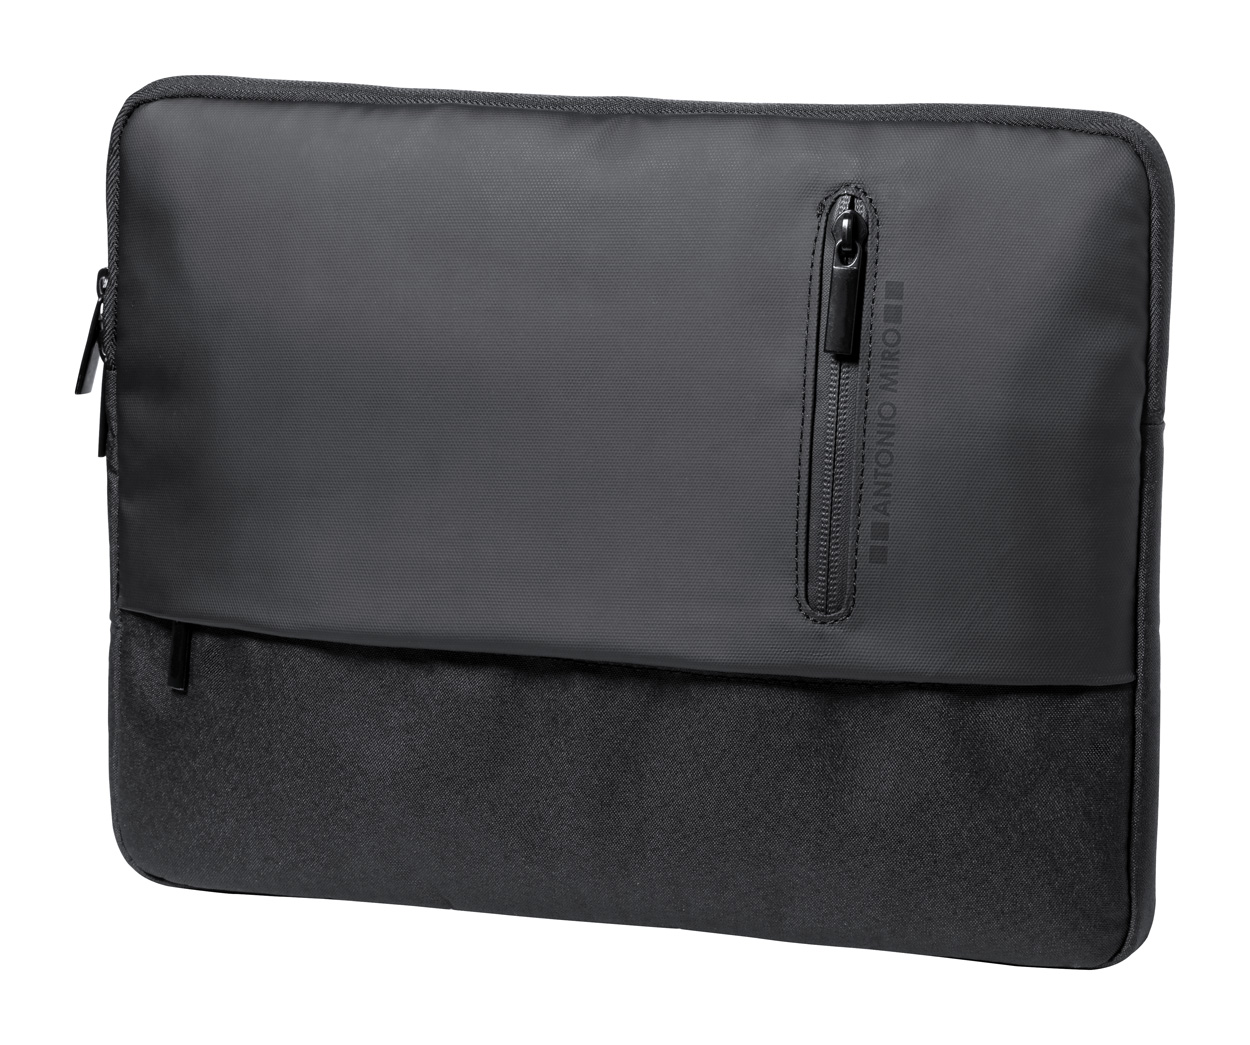 Dilon laptop bag - black